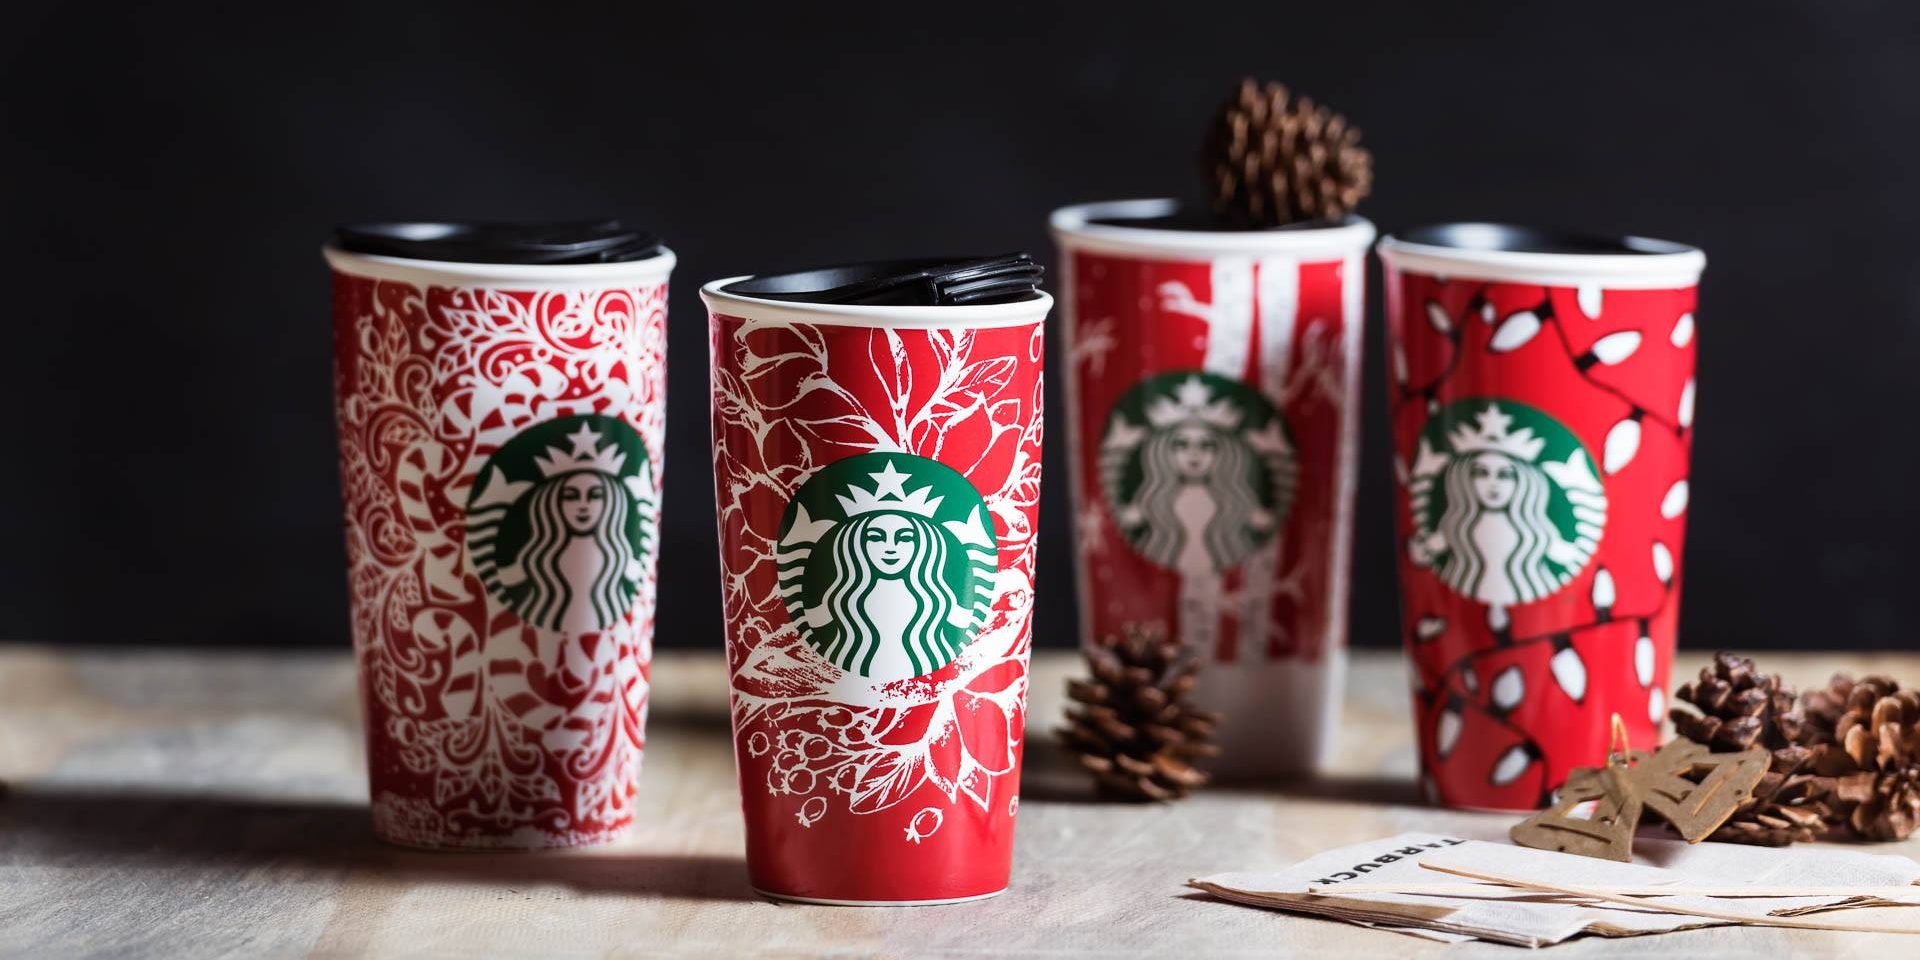 Starbucks Singapore 40% Off Merry Mugs & Festive Tumblers Promotion ends 25 Dec 2016